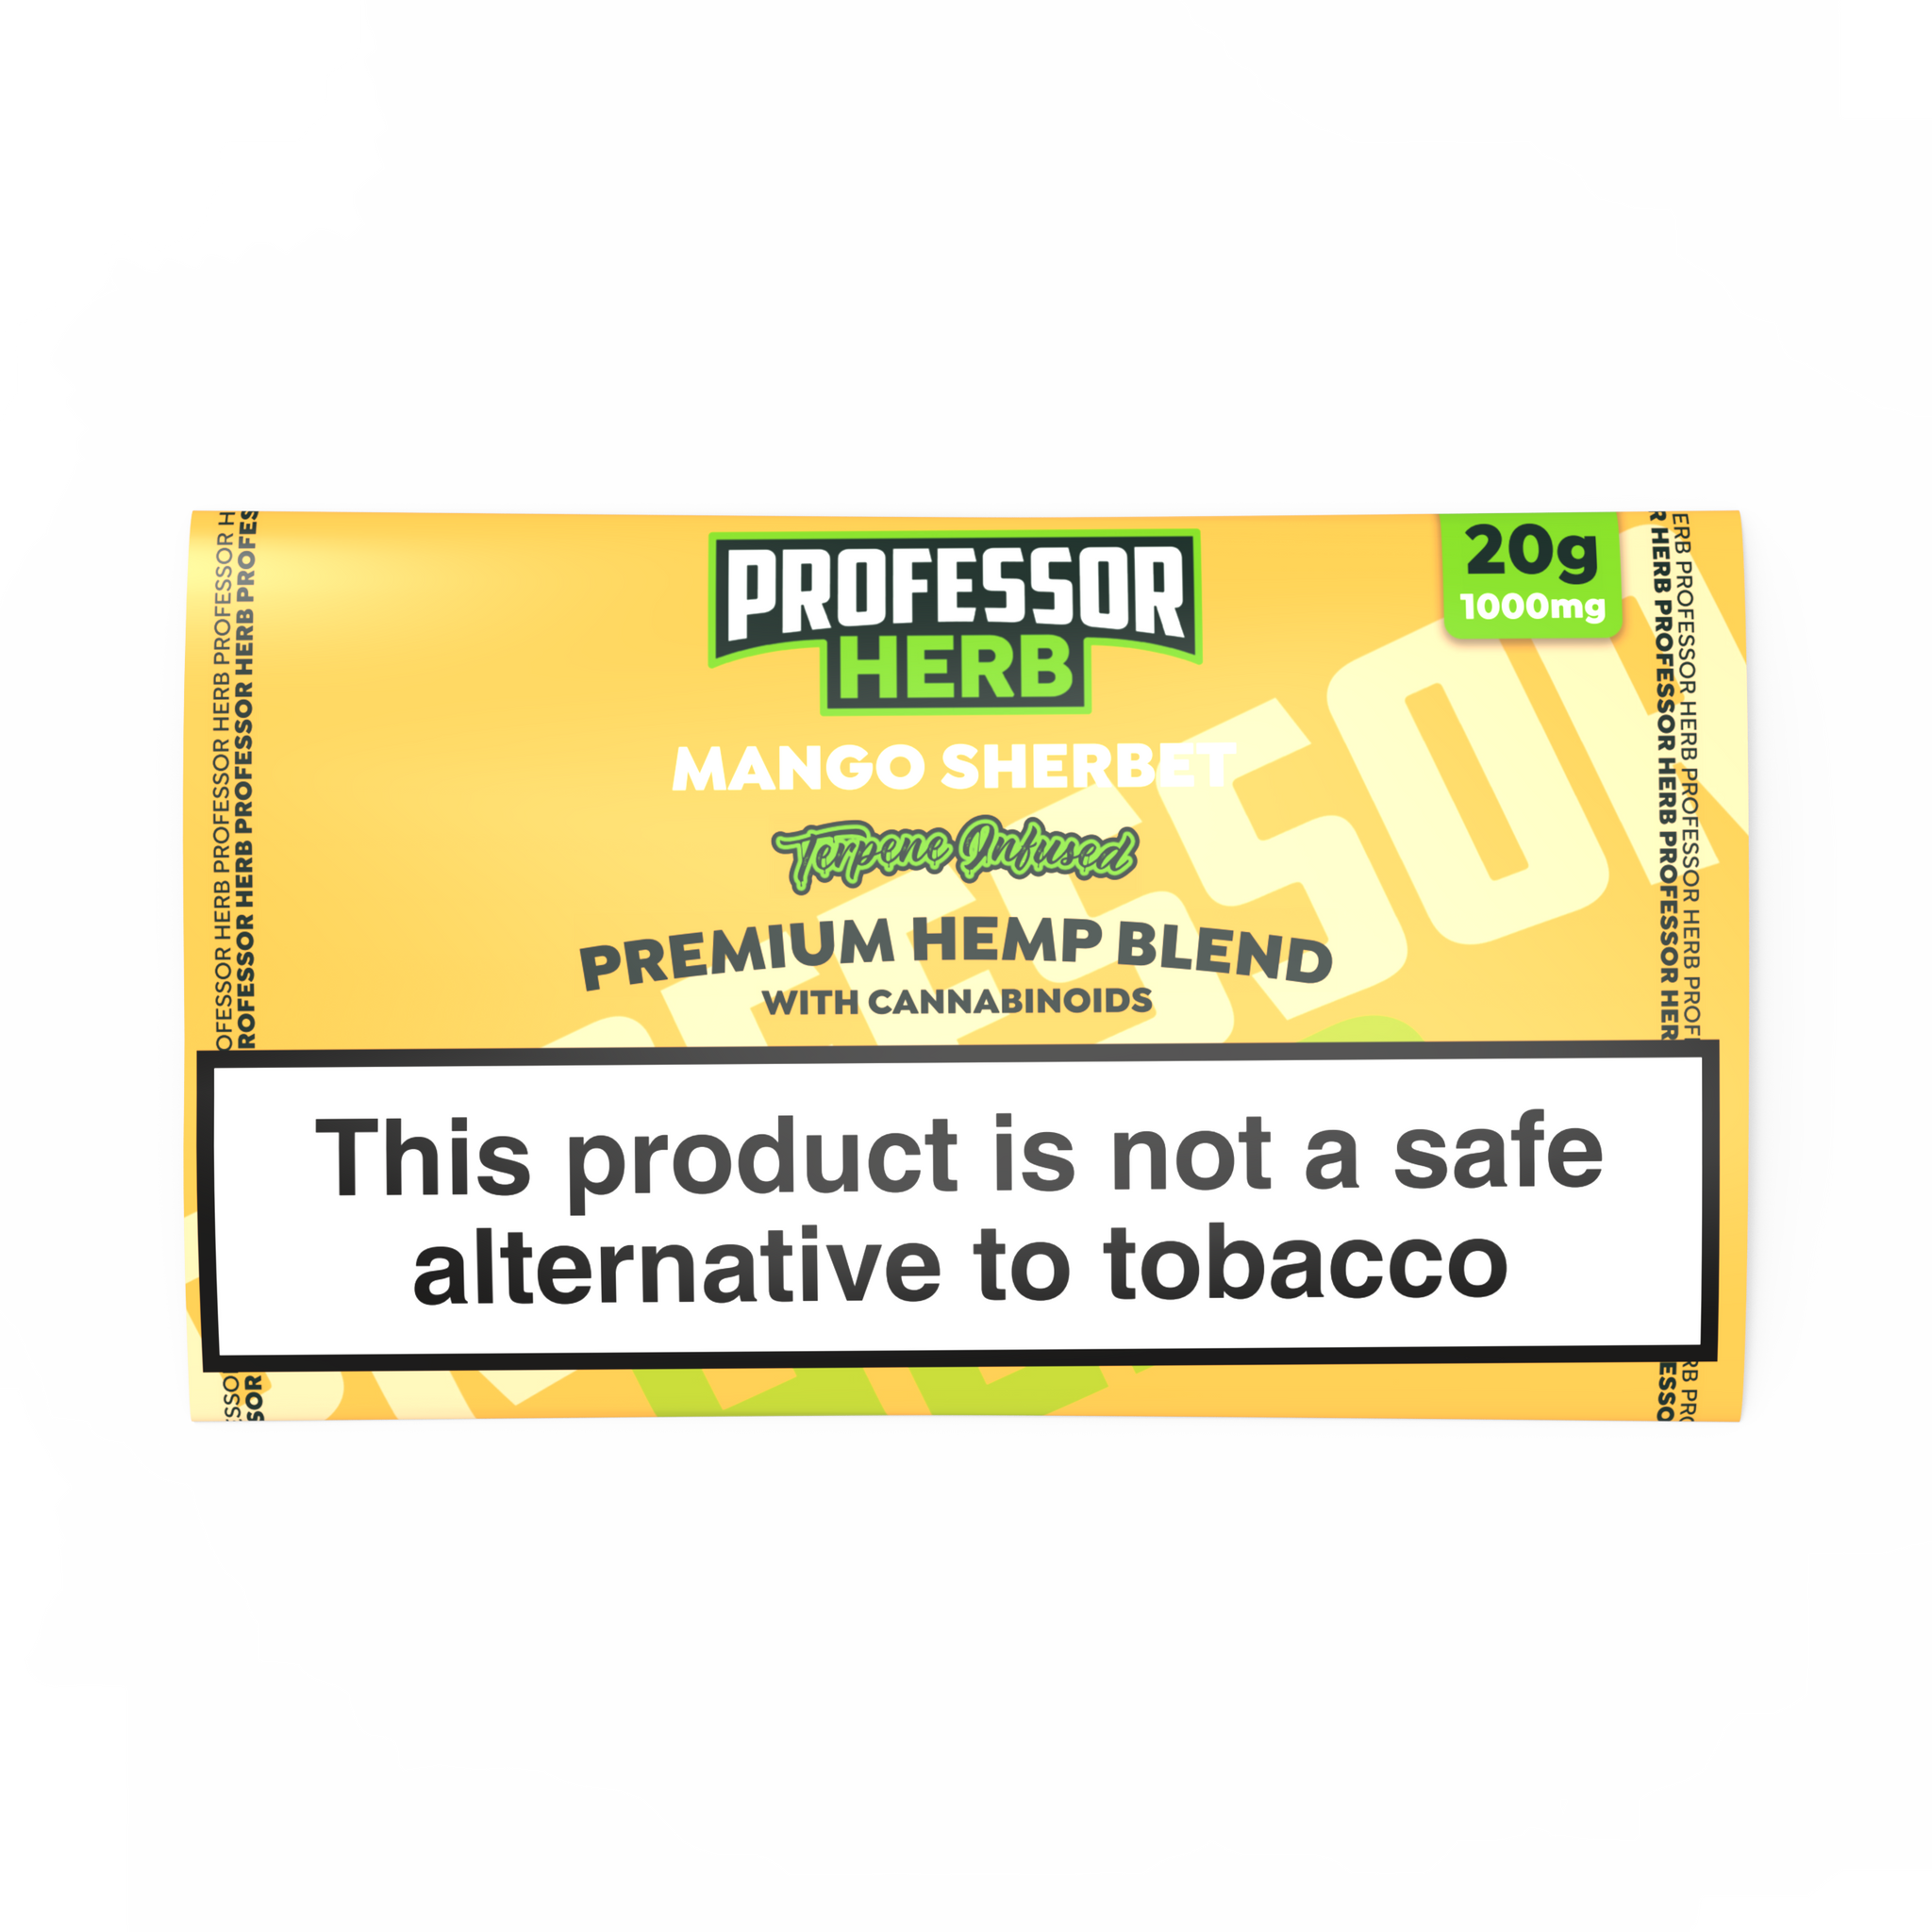 Professor Herb Premium Hemp Blend (20g) - Mango Sherbet